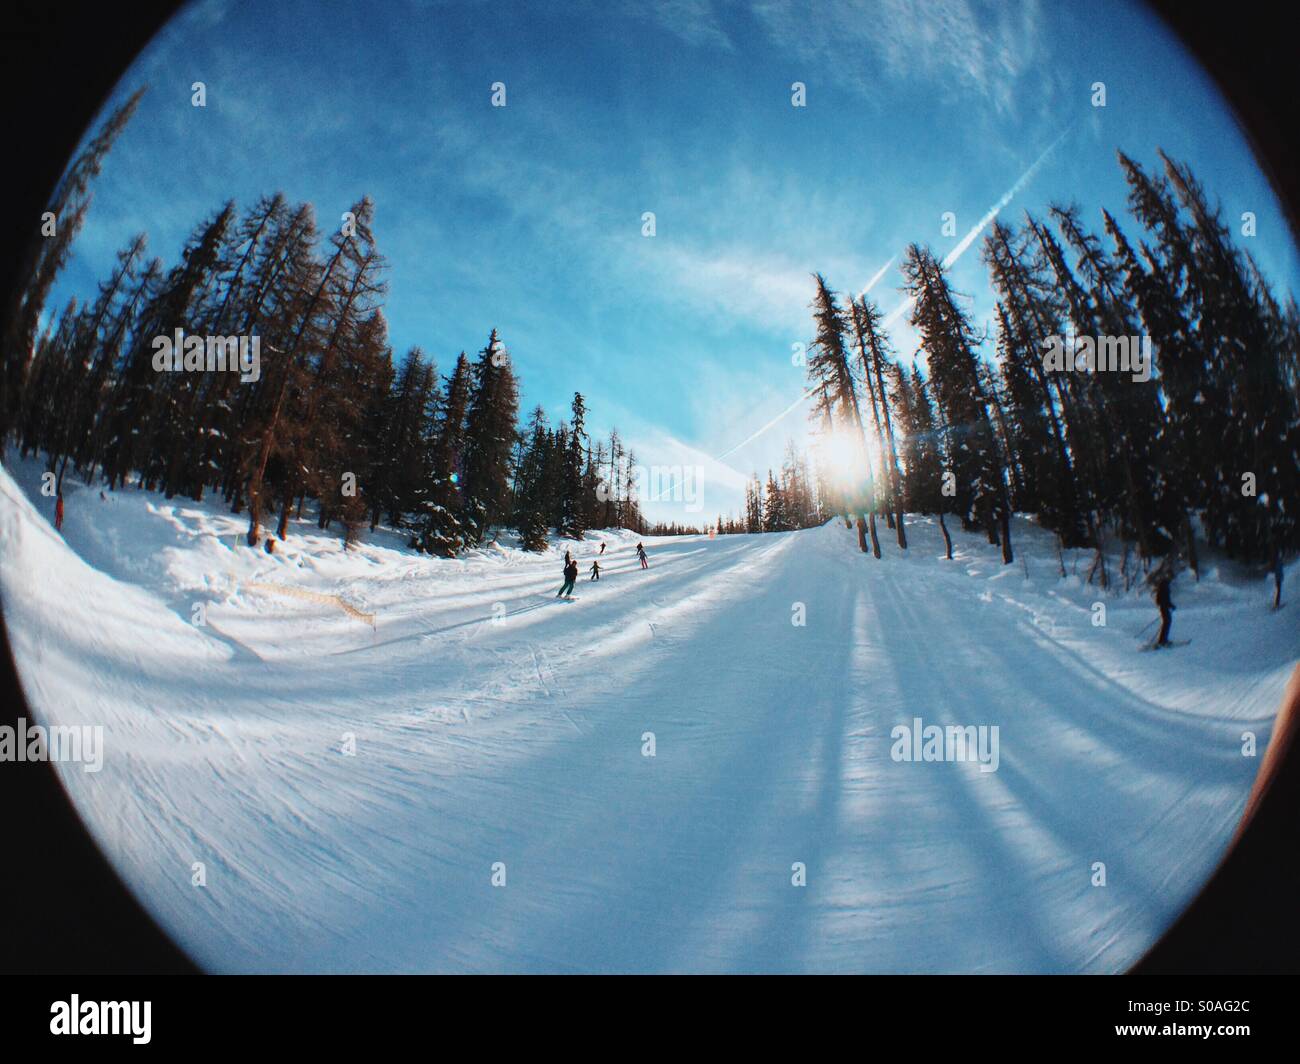 Fisheye lens, iPhone 5s, Olloclip lens Stock Photo - Alamy